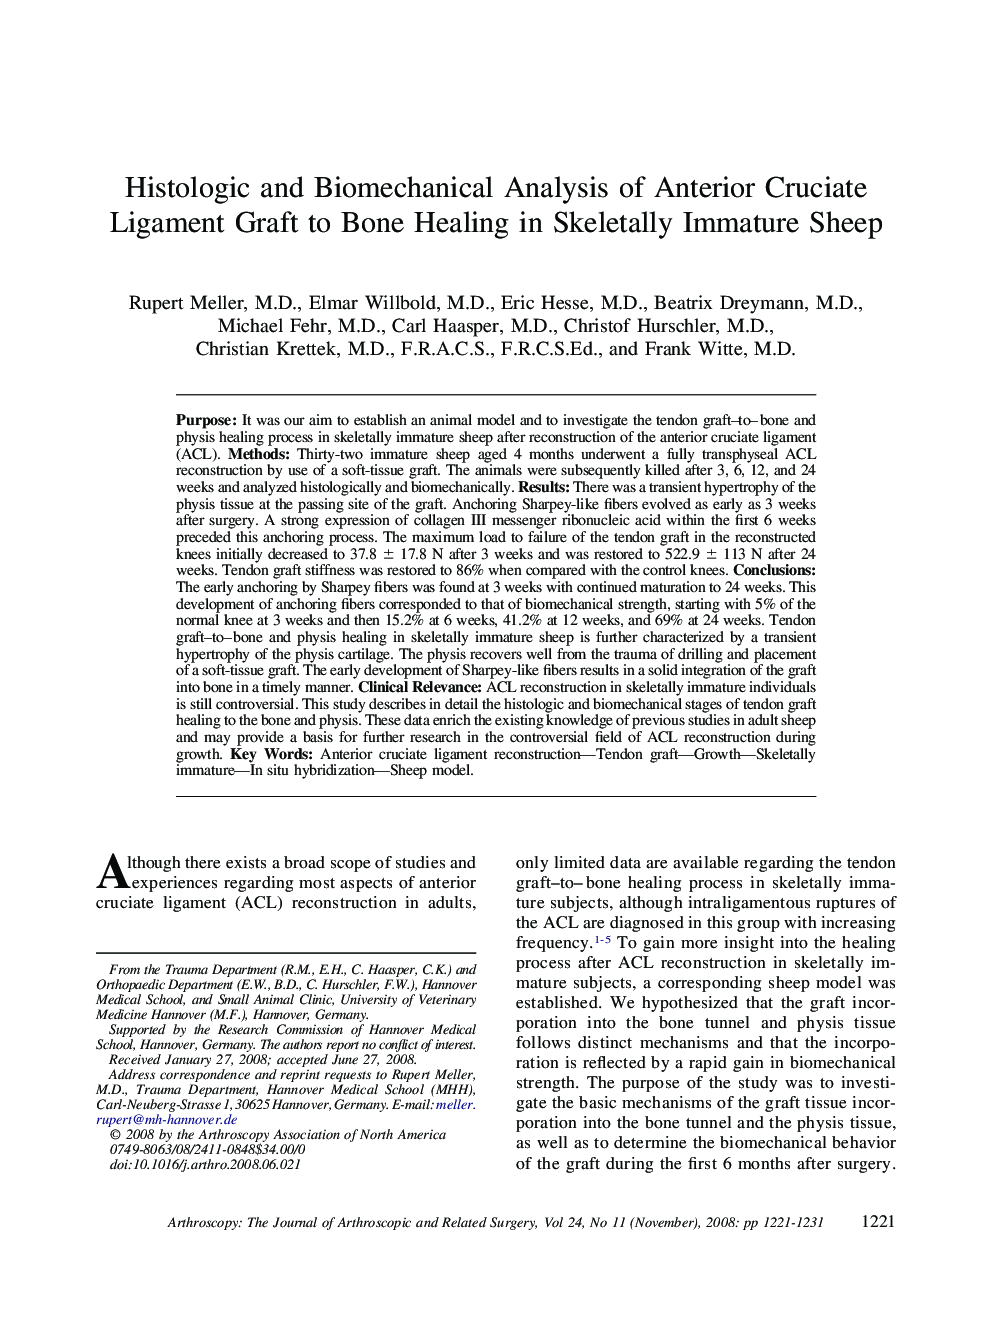 Histologic and Biomechanical Analysis of Anterior Cruciate Ligament Graft to Bone Healing in Skeletally Immature Sheep 